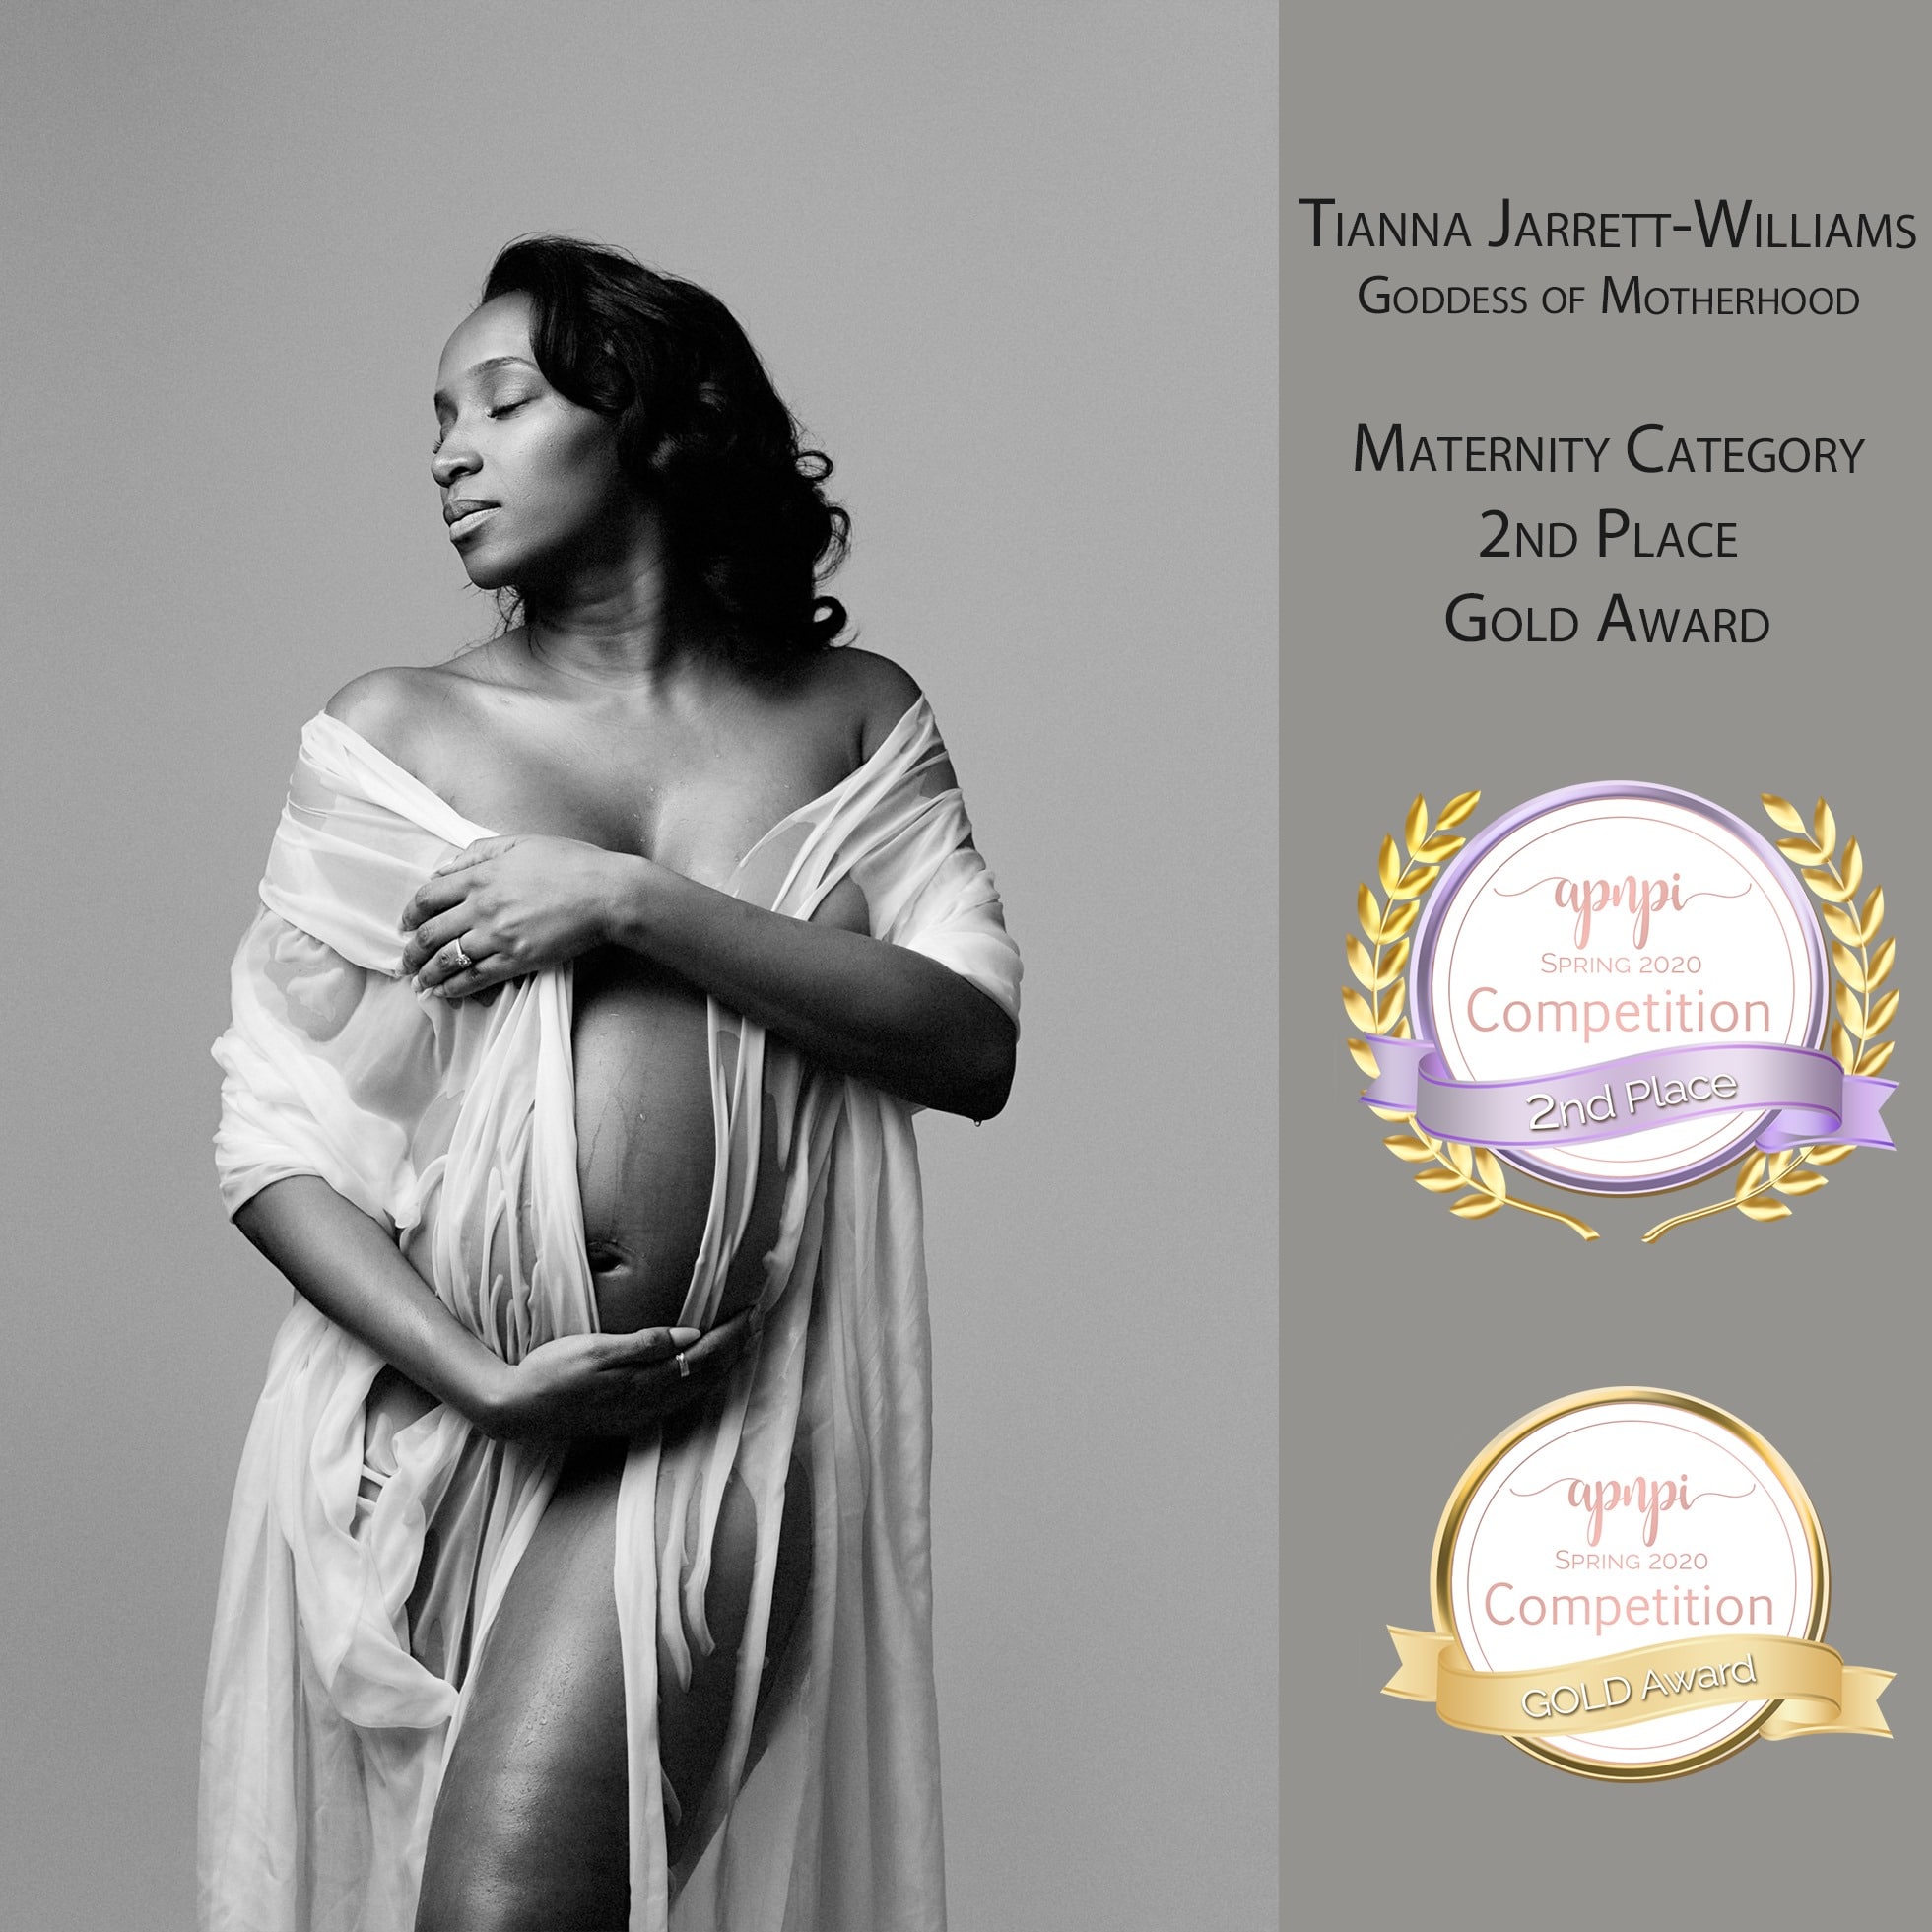 APNPI Competition 2nd Place Winner – Maternity. “Goddess of Motherhood” by Tianna Jarrett-Williams